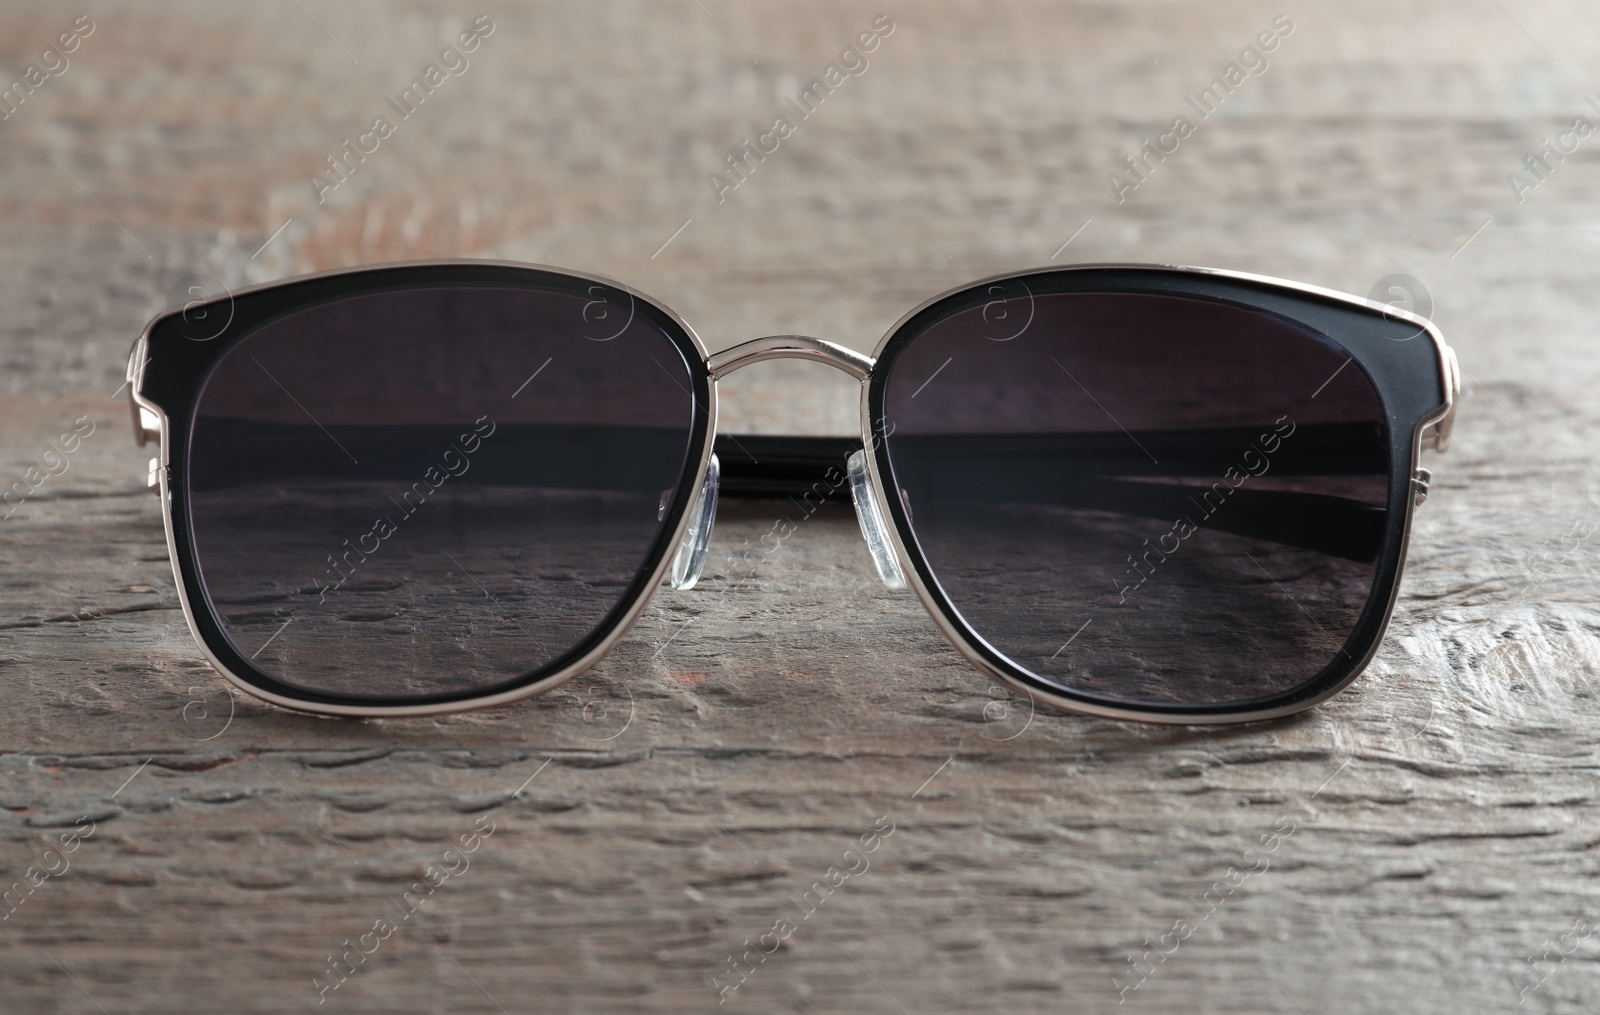 Photo of Stylish sunglasses on wooden background, closeup view